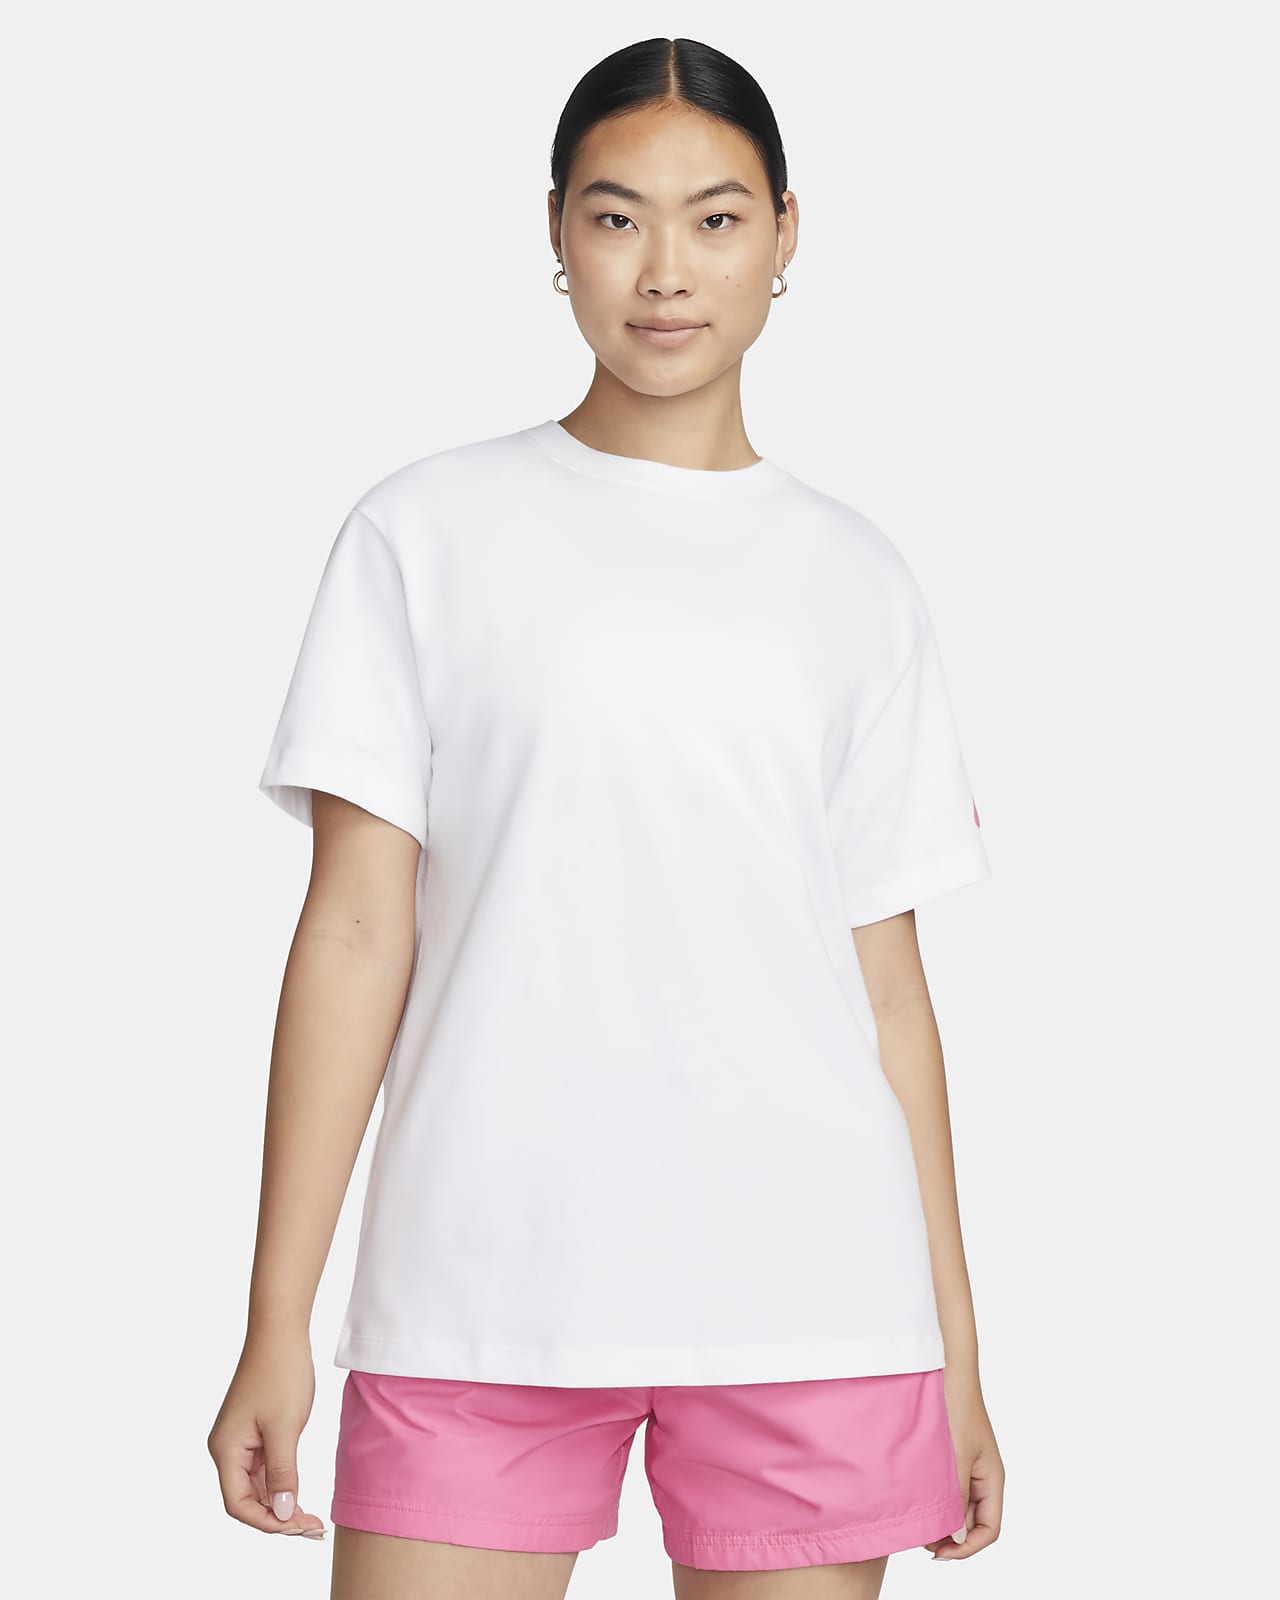 Nike Sportswear x Megan Rapinoe Women's T-Shirt. Nike PT